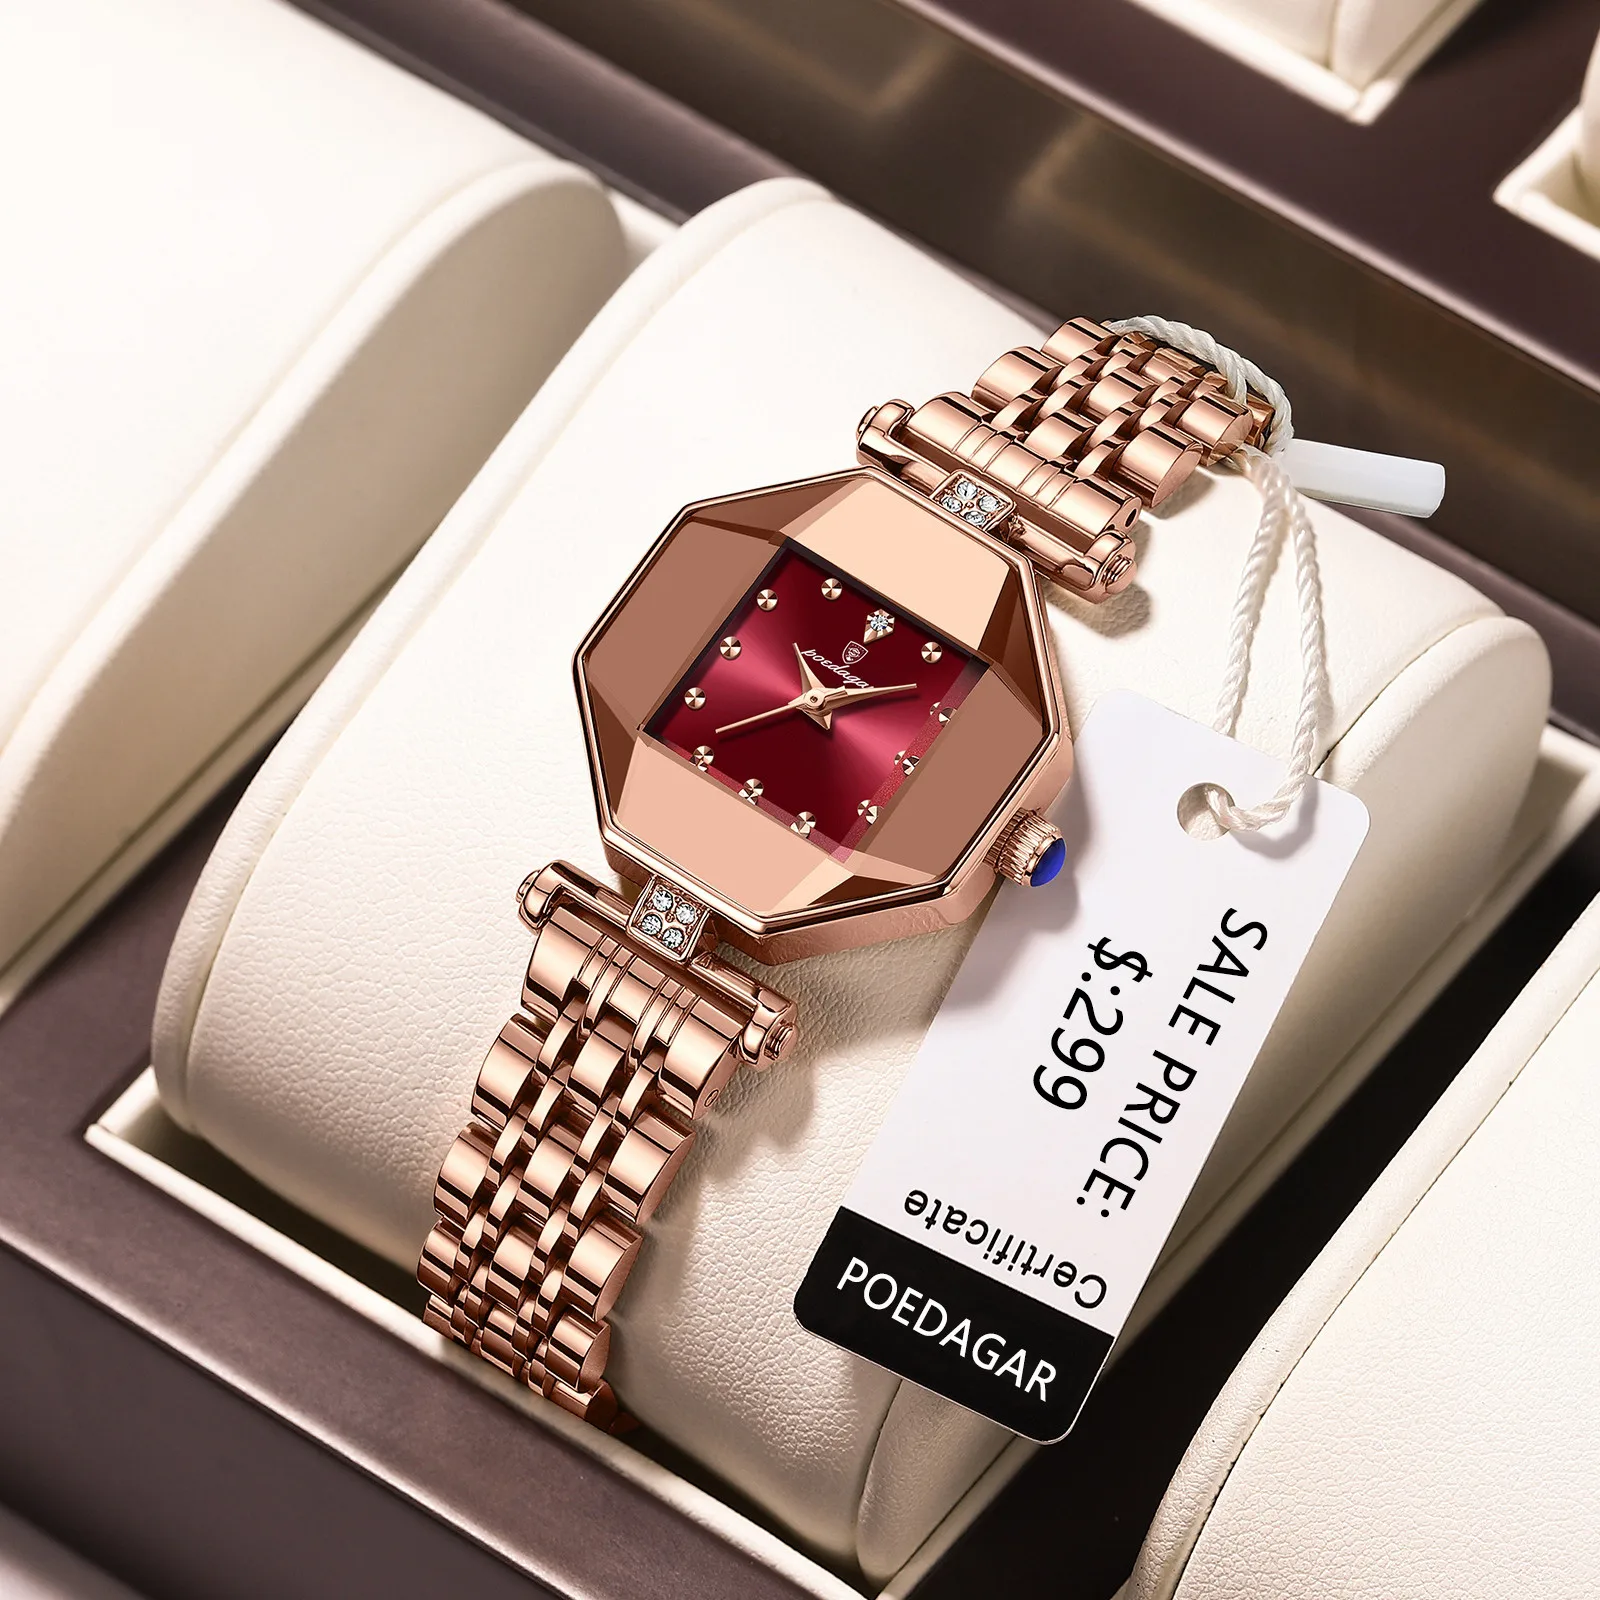 POEDAGAR Luxury Fashion Women's Watch High Quality Casual Diamond Stainless Steel Waterproof Quartz Watch for Women reloj mujer enlarge